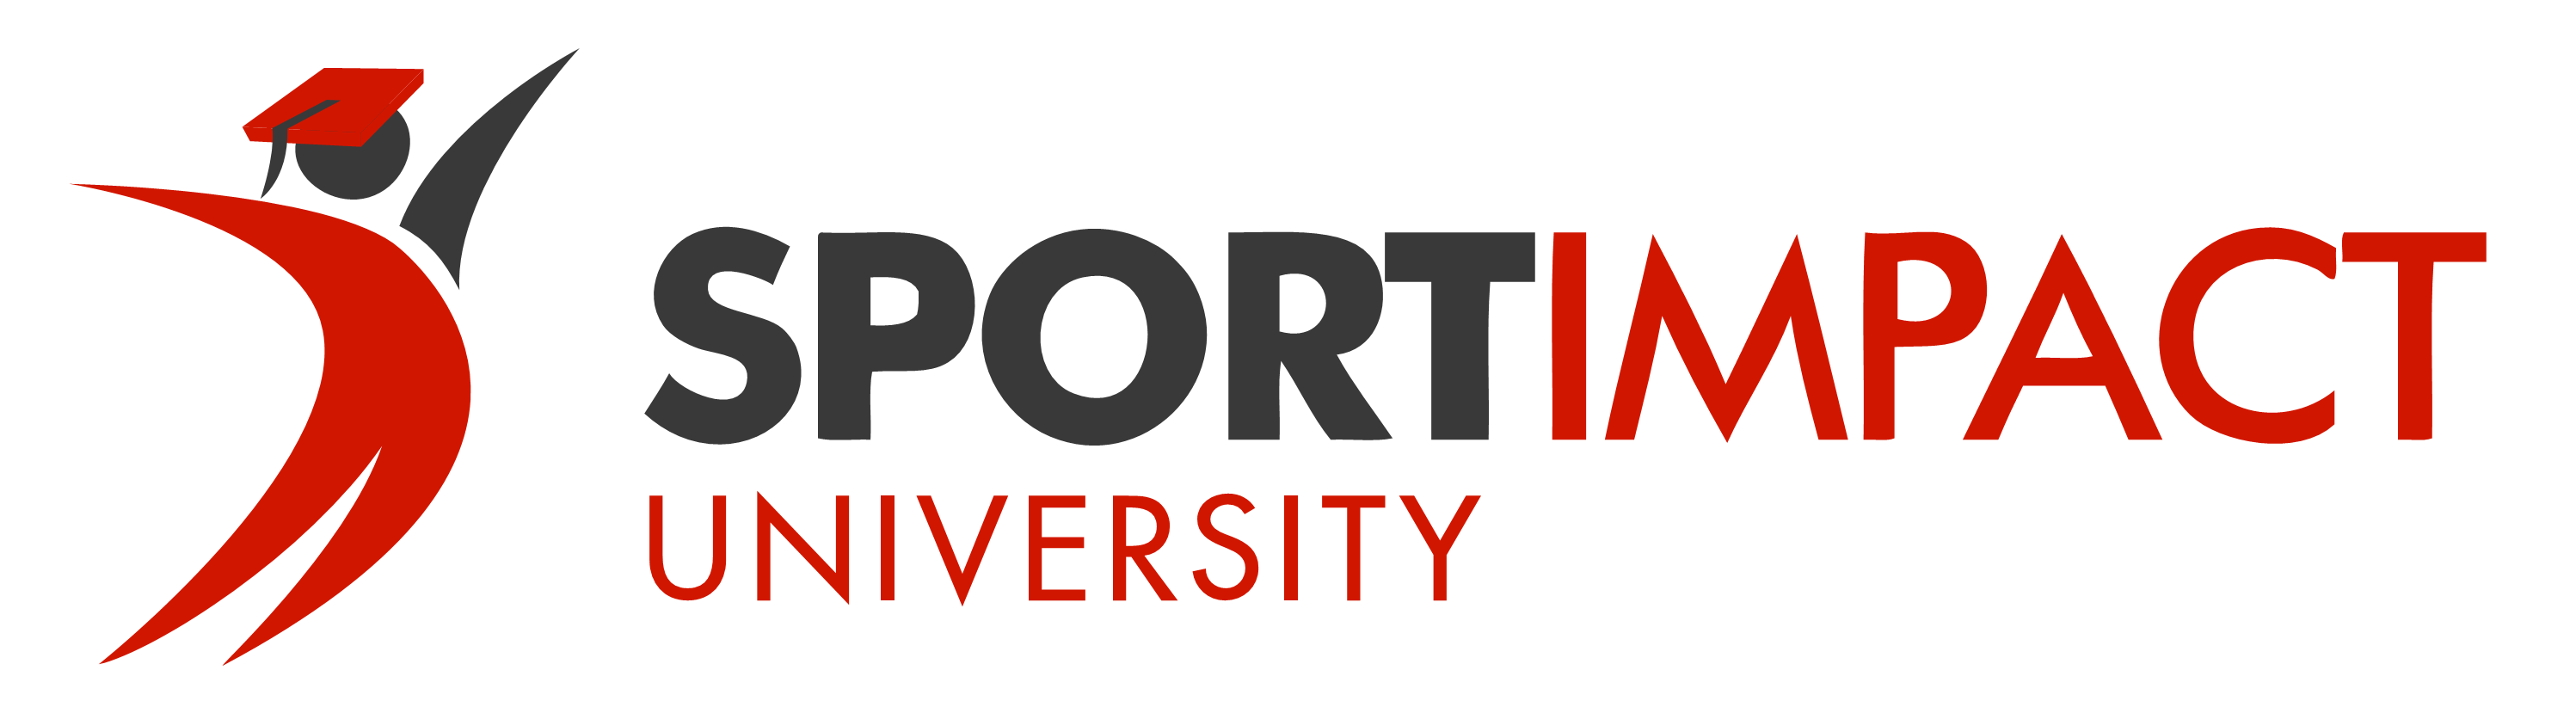 SportImpact_University